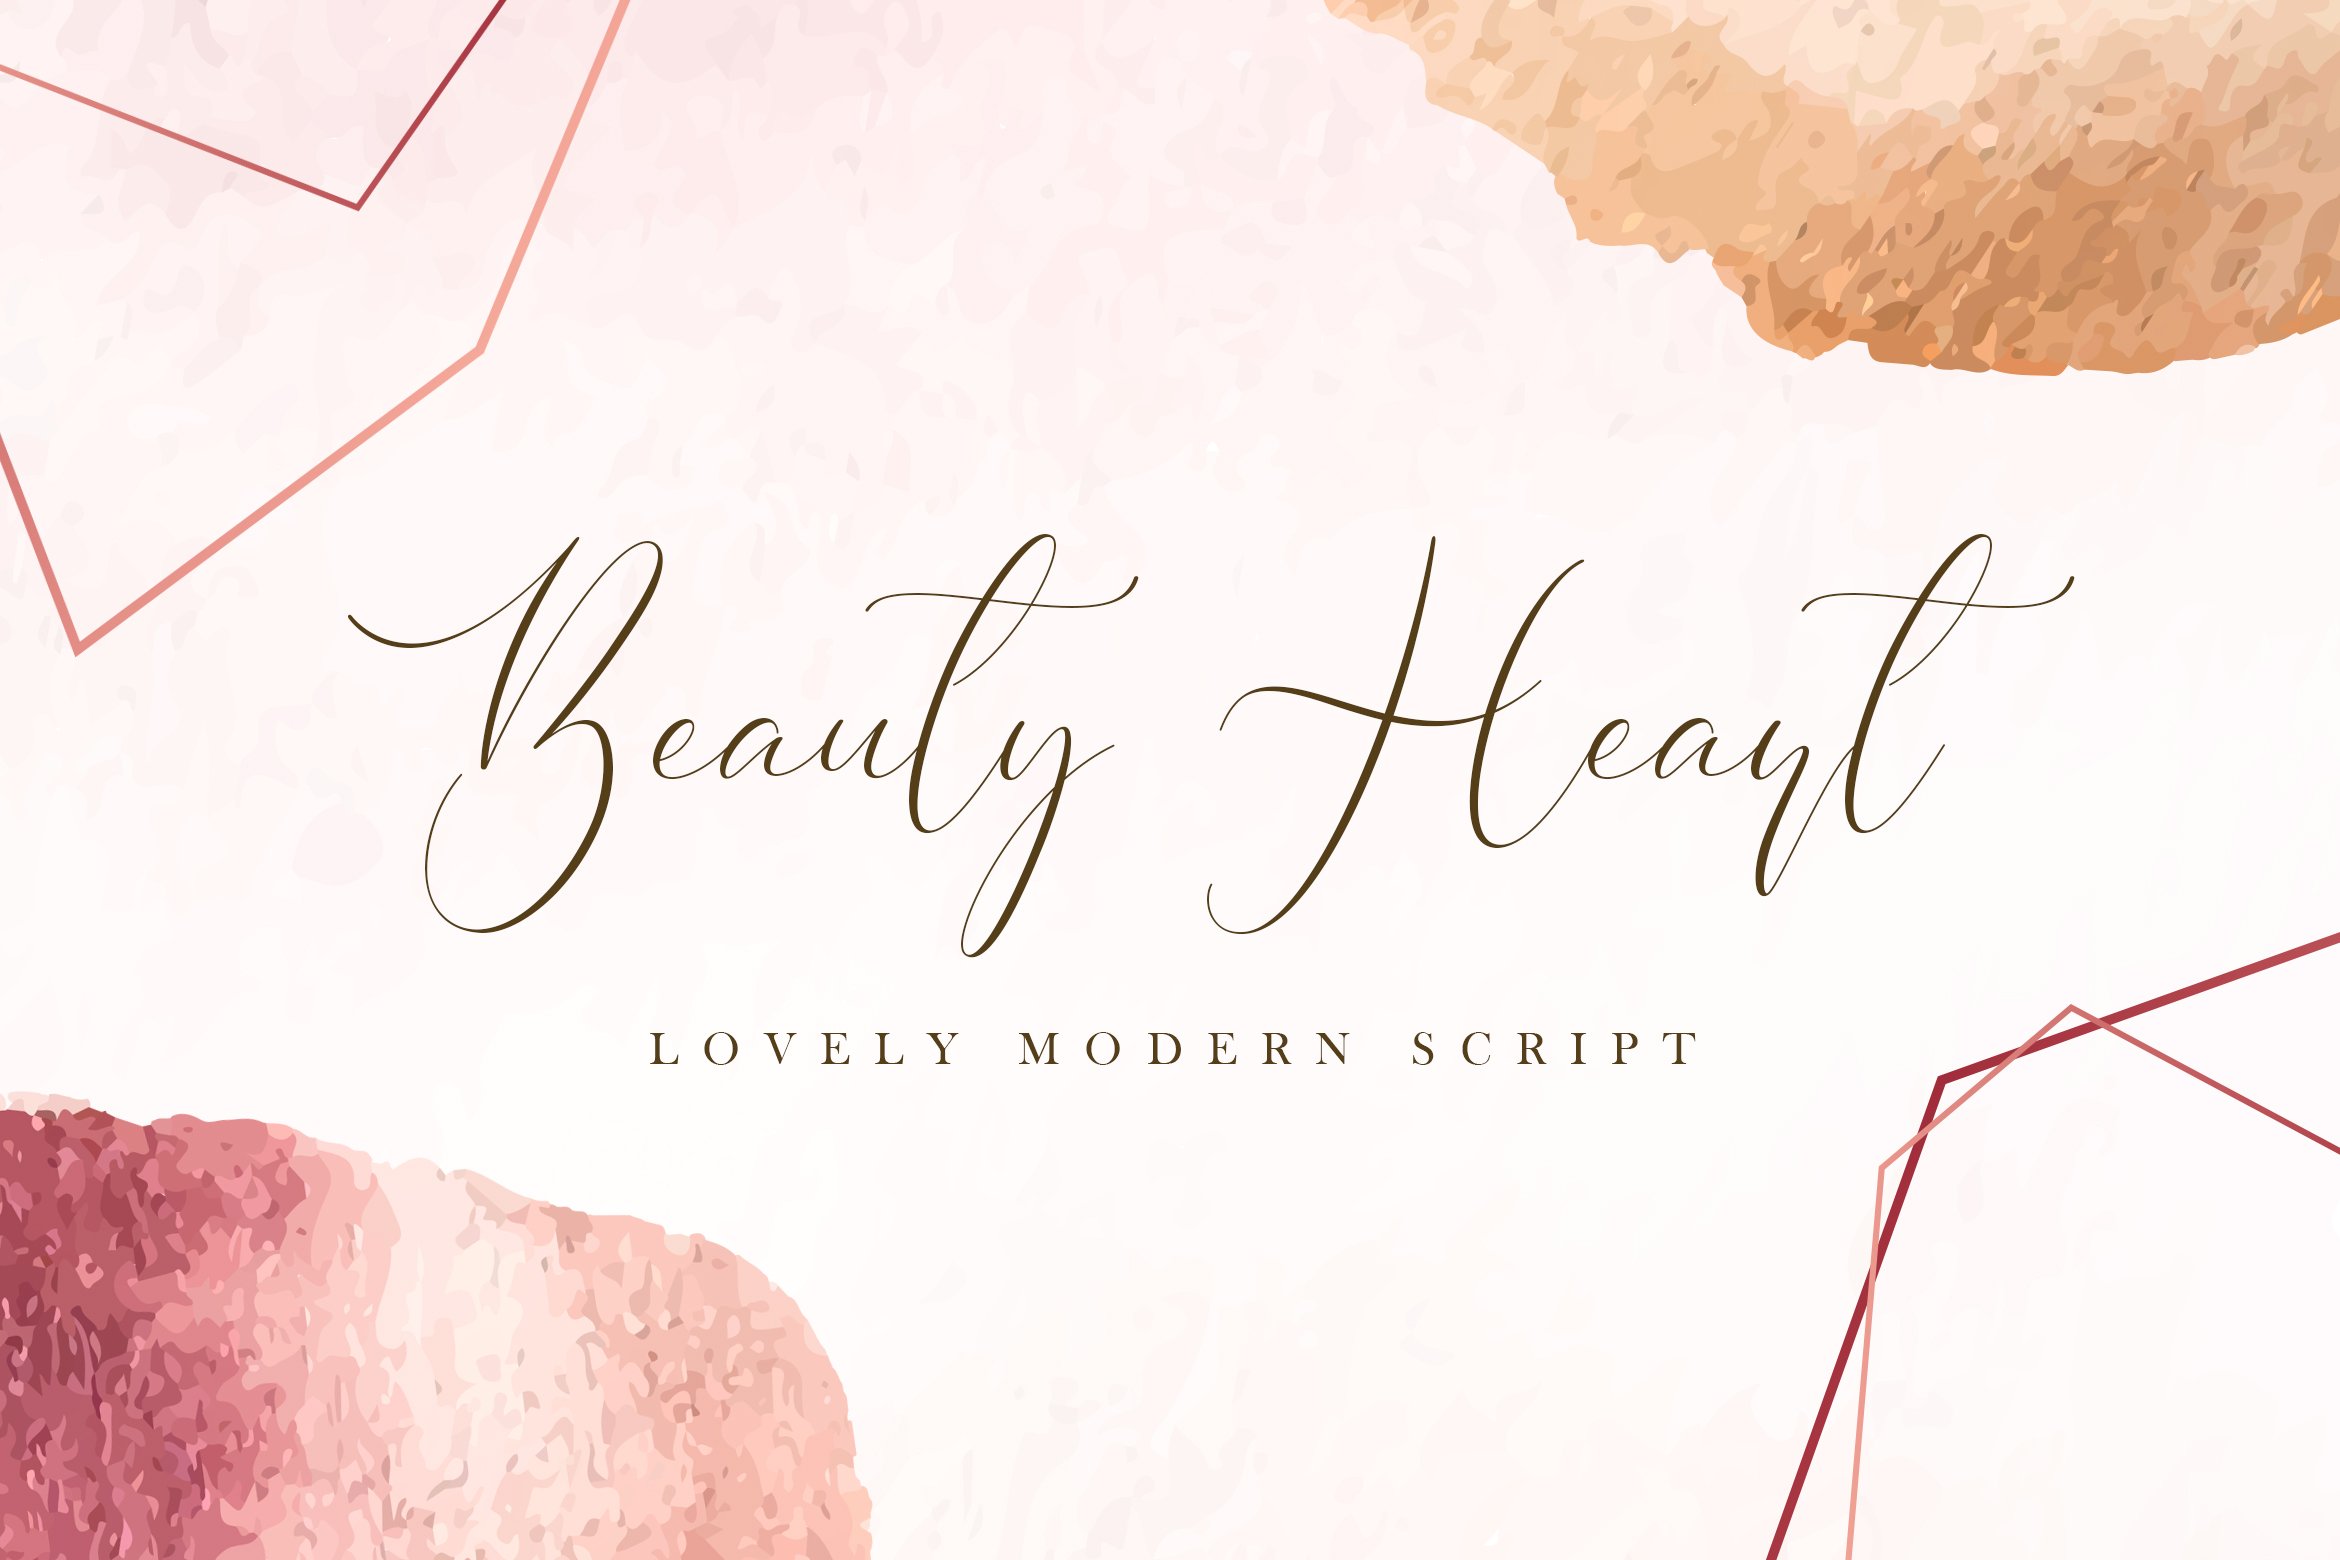 Beauty Heart - Lovely Script Font cover image.